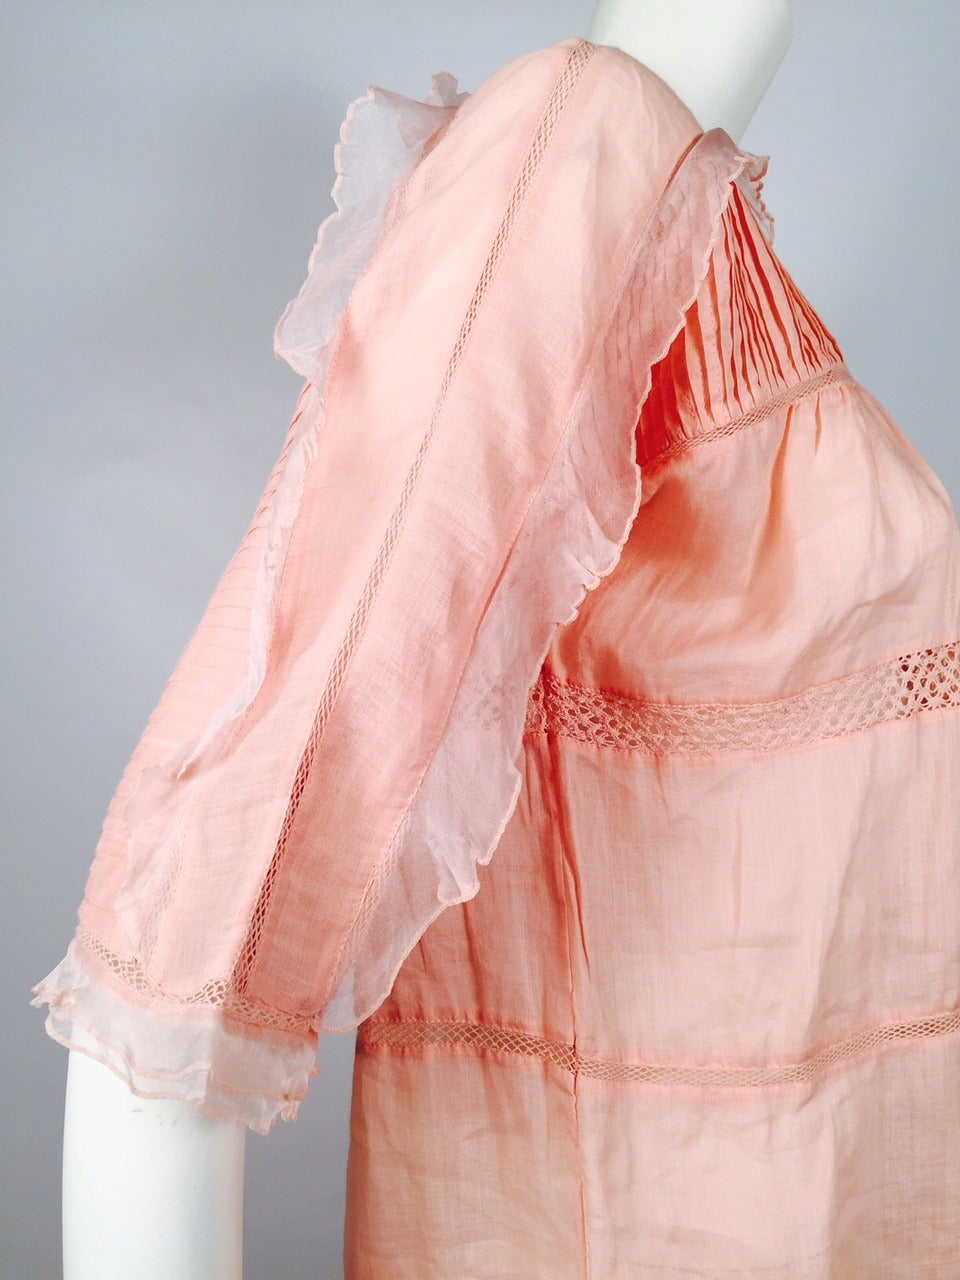 Isabel Marant Peach Ramie and Silk Dress 1